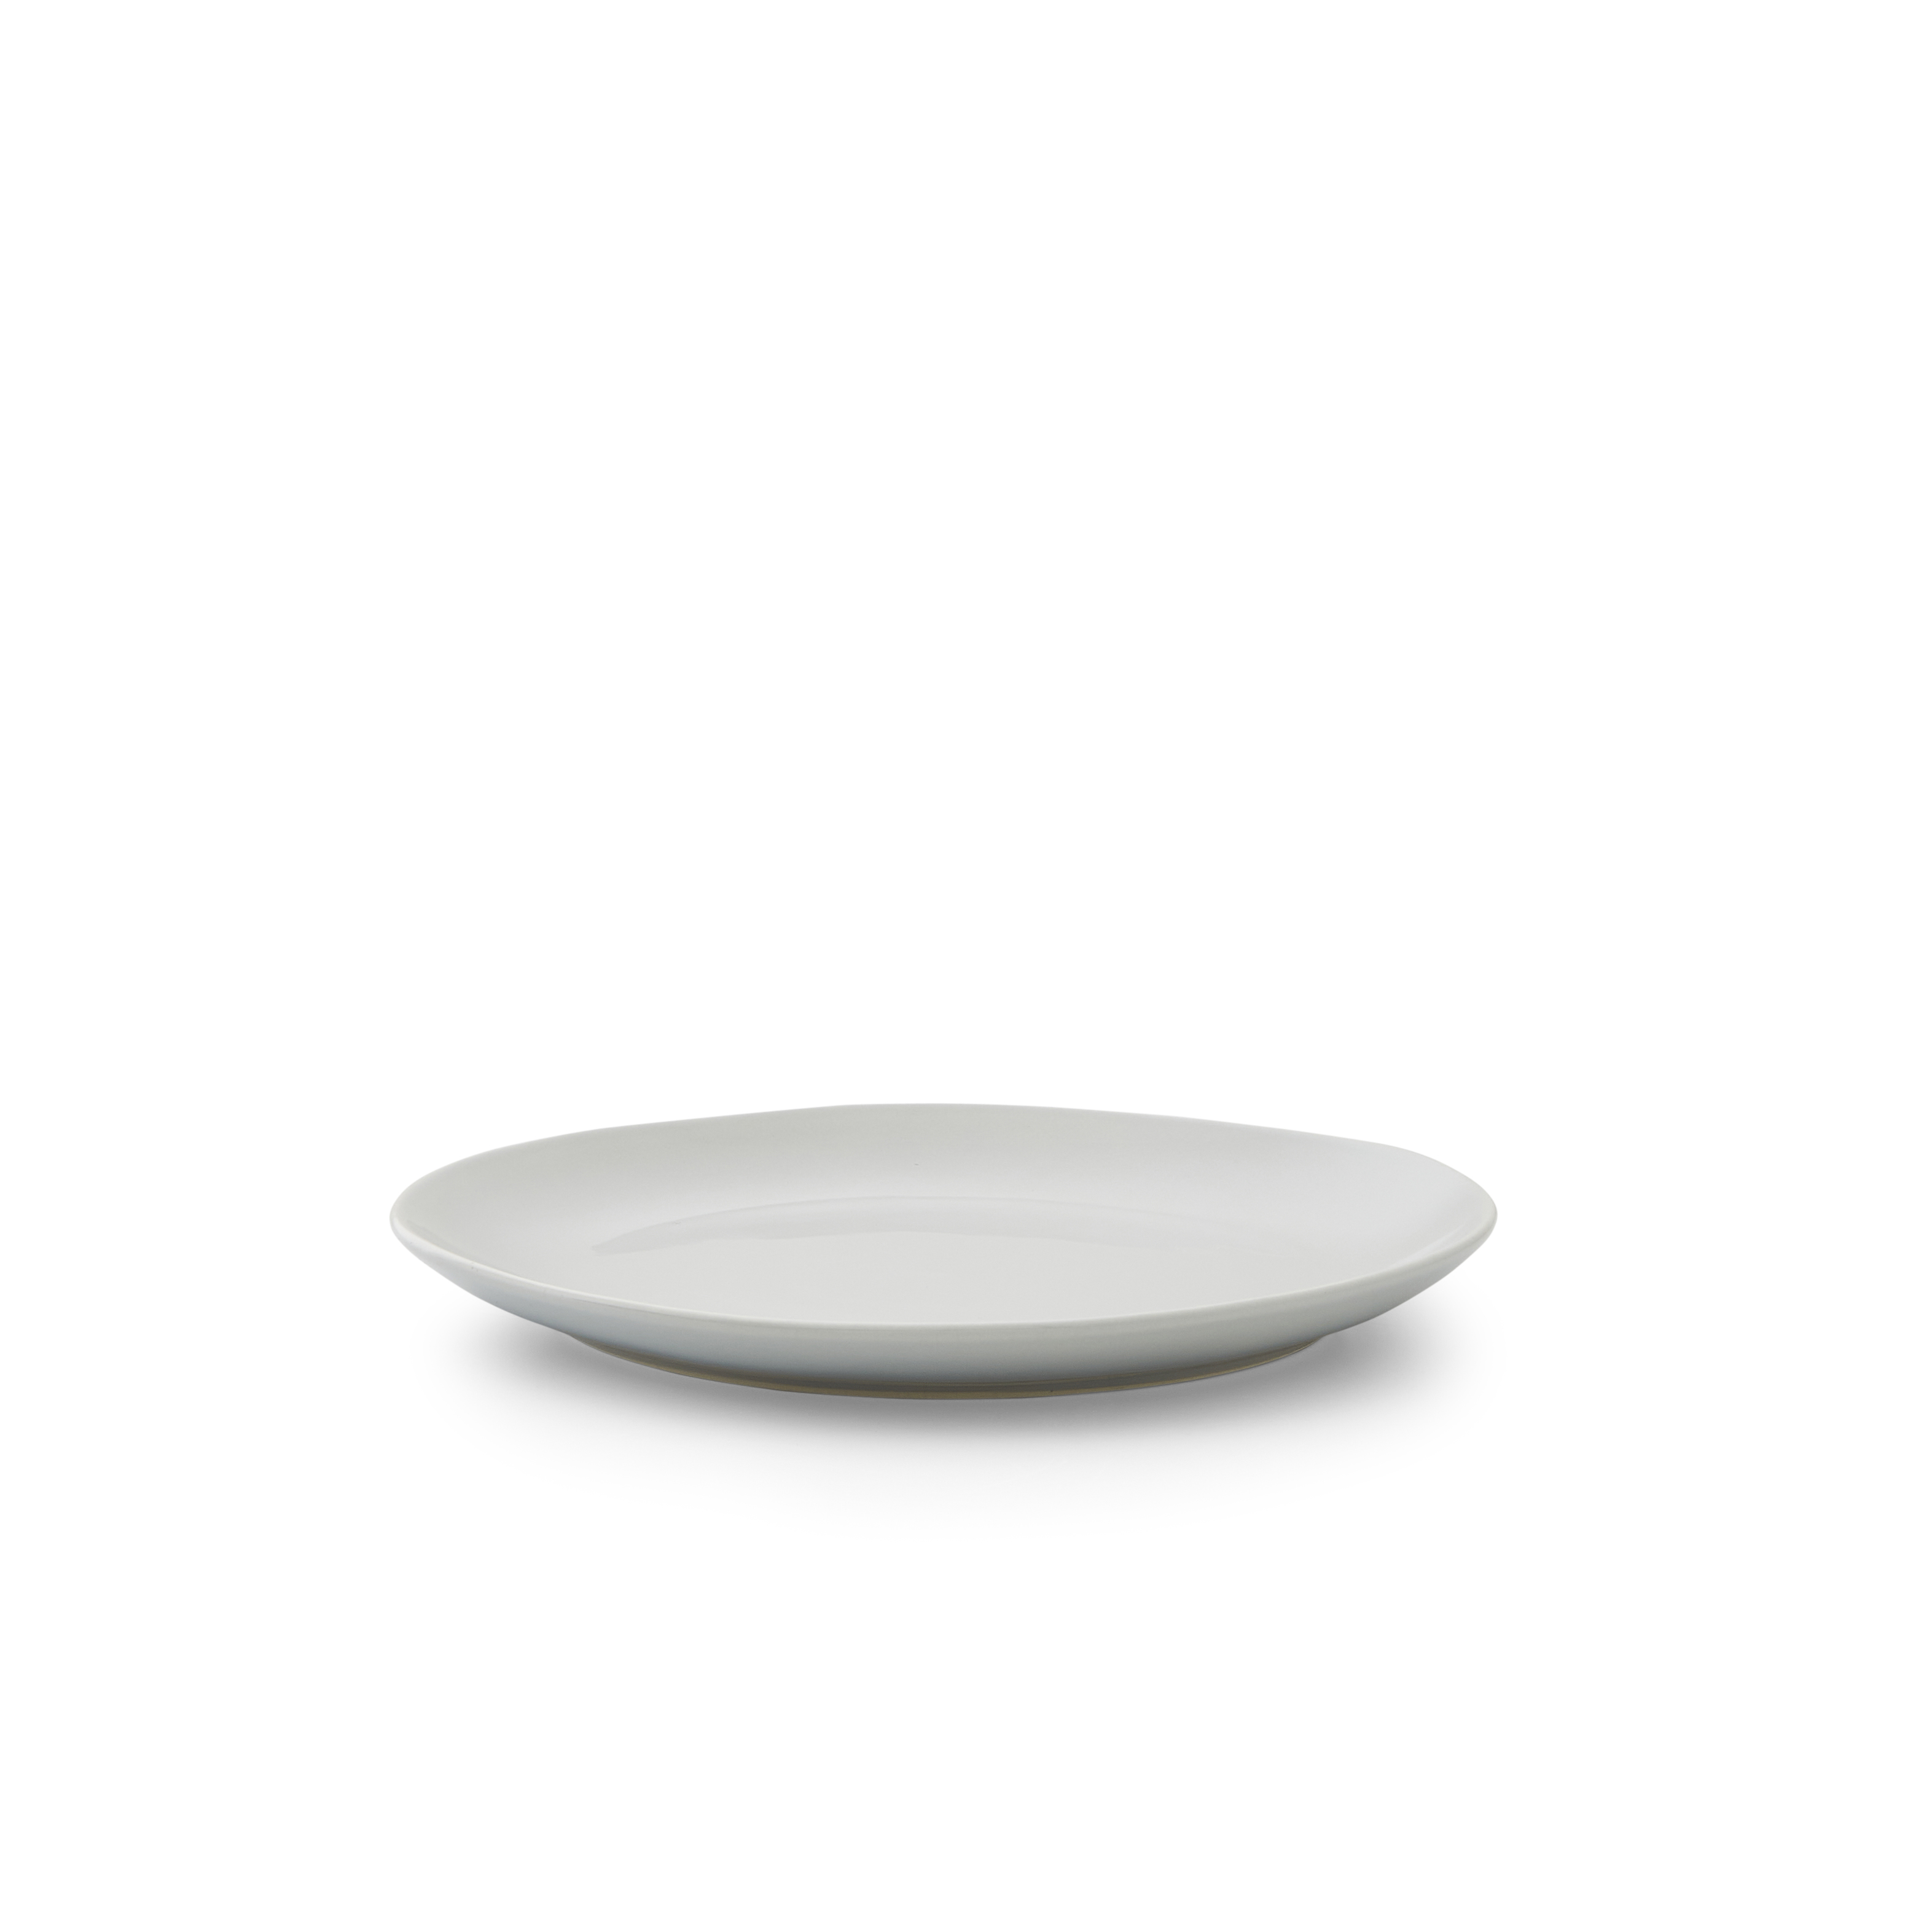 Sophie Conran Arbor 4 Salad Plates, Grey image number null